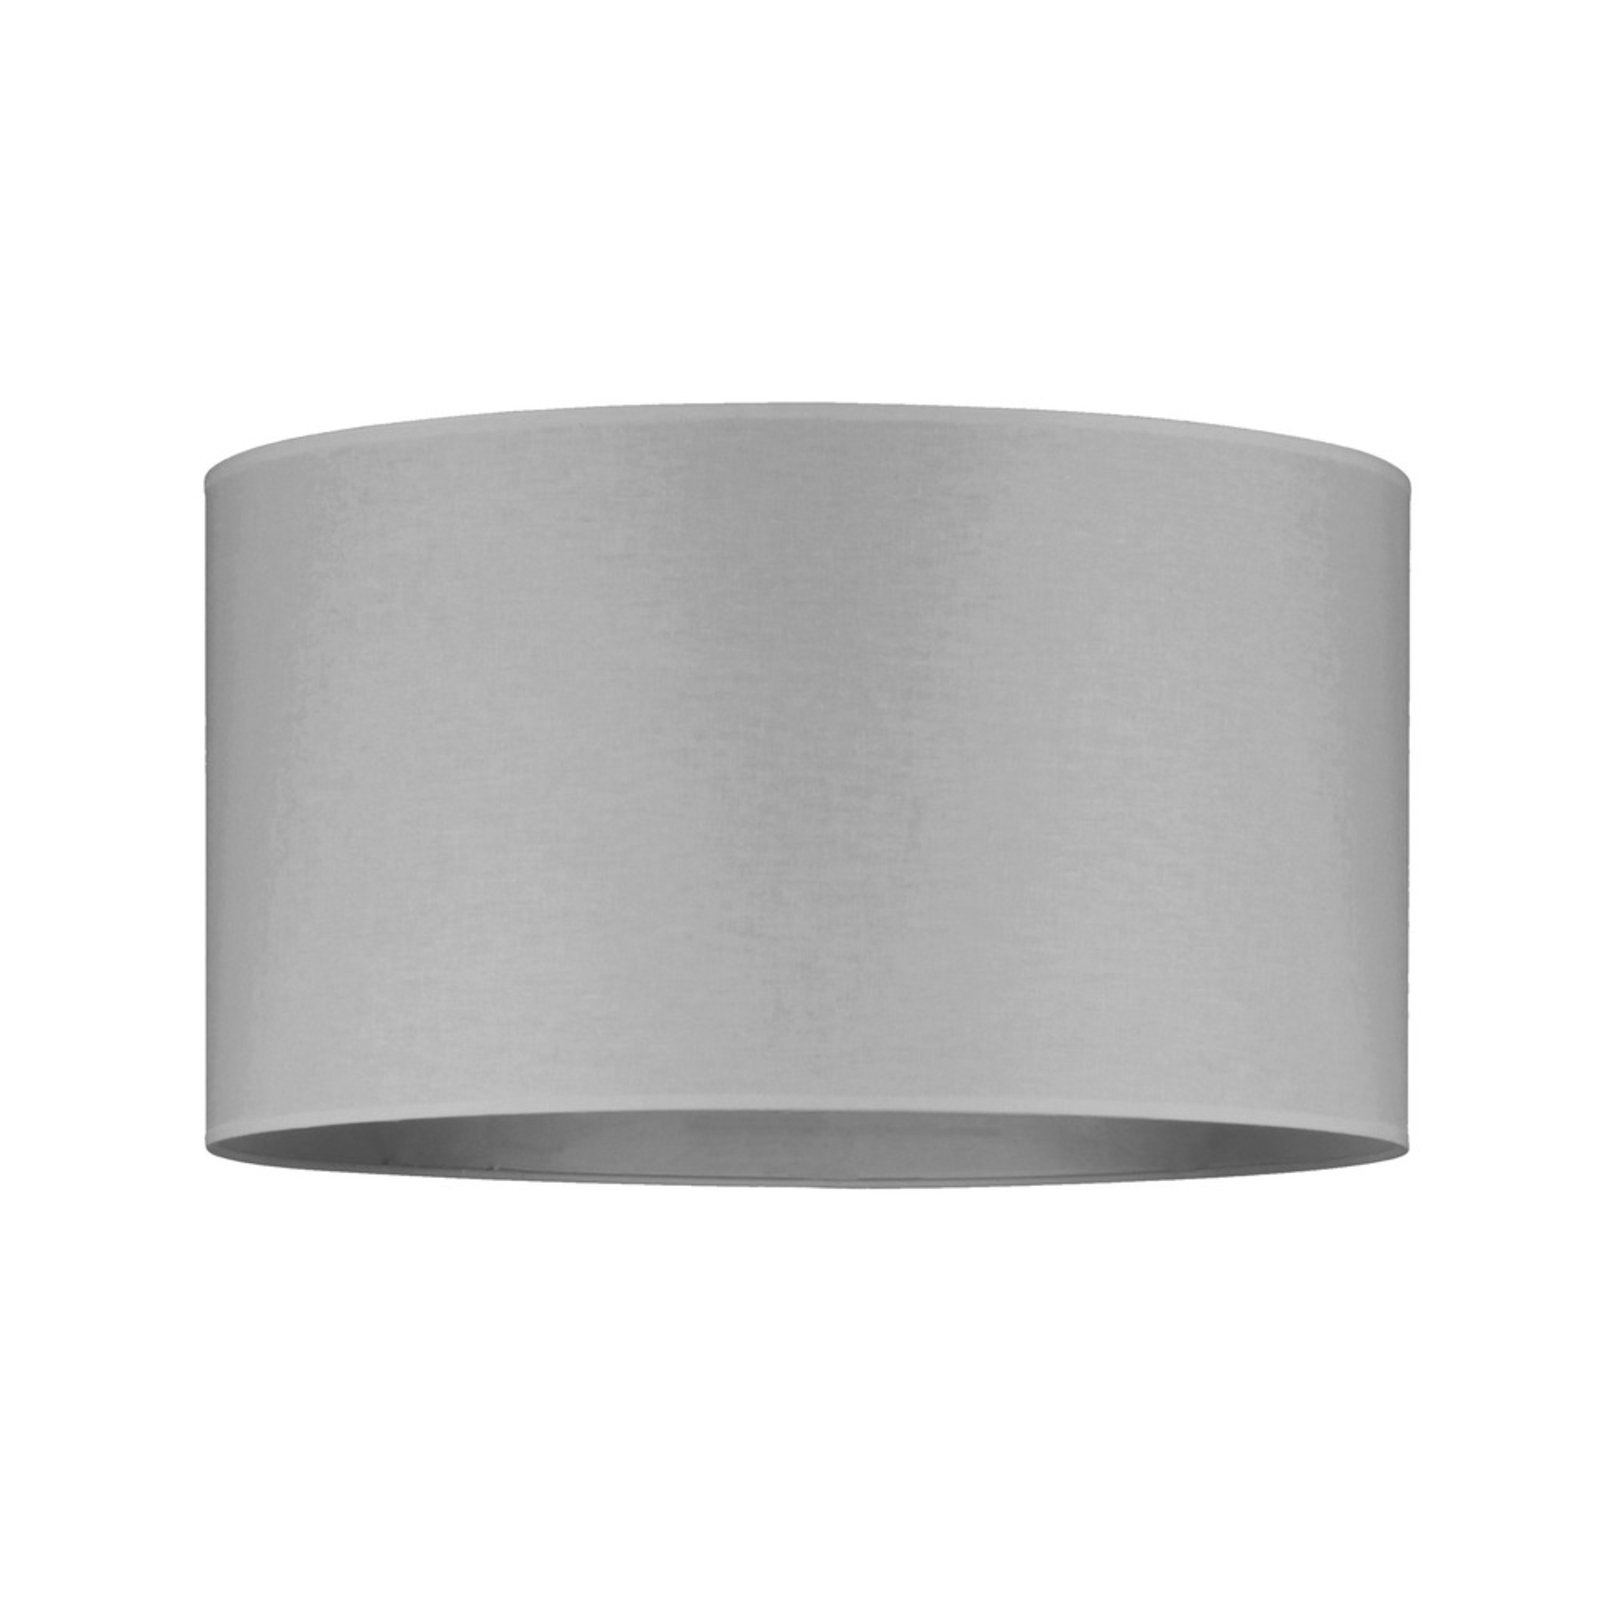 Corralee lampshade Ø 50 cm height 25 cm grey